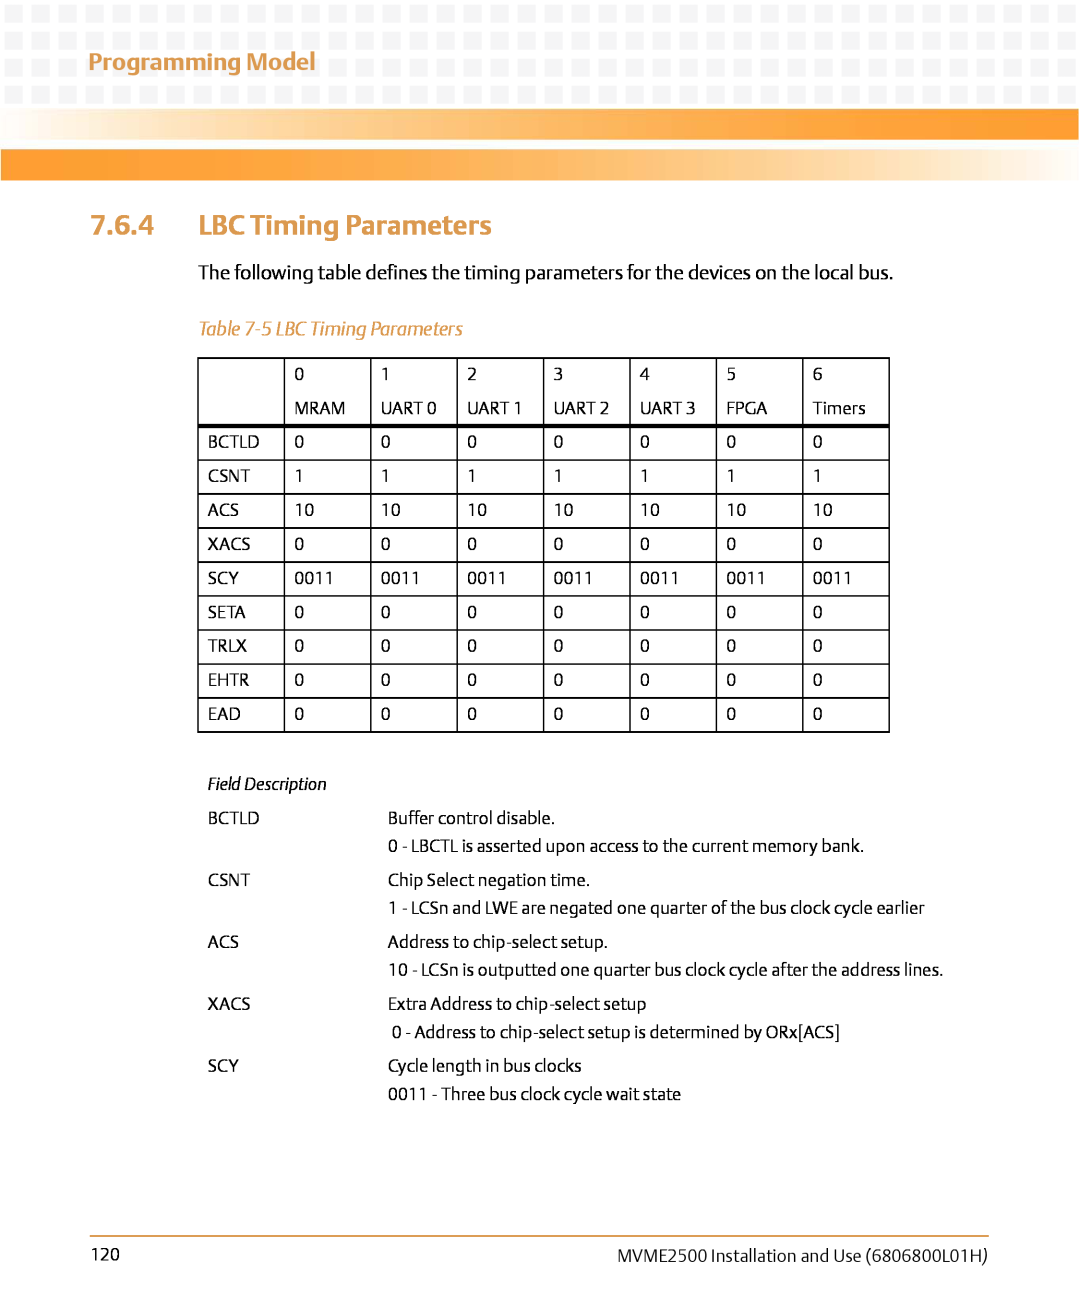 Emerson MVME2500 manual 5 LBC Timing Parameters, Programming Model, Field Description 